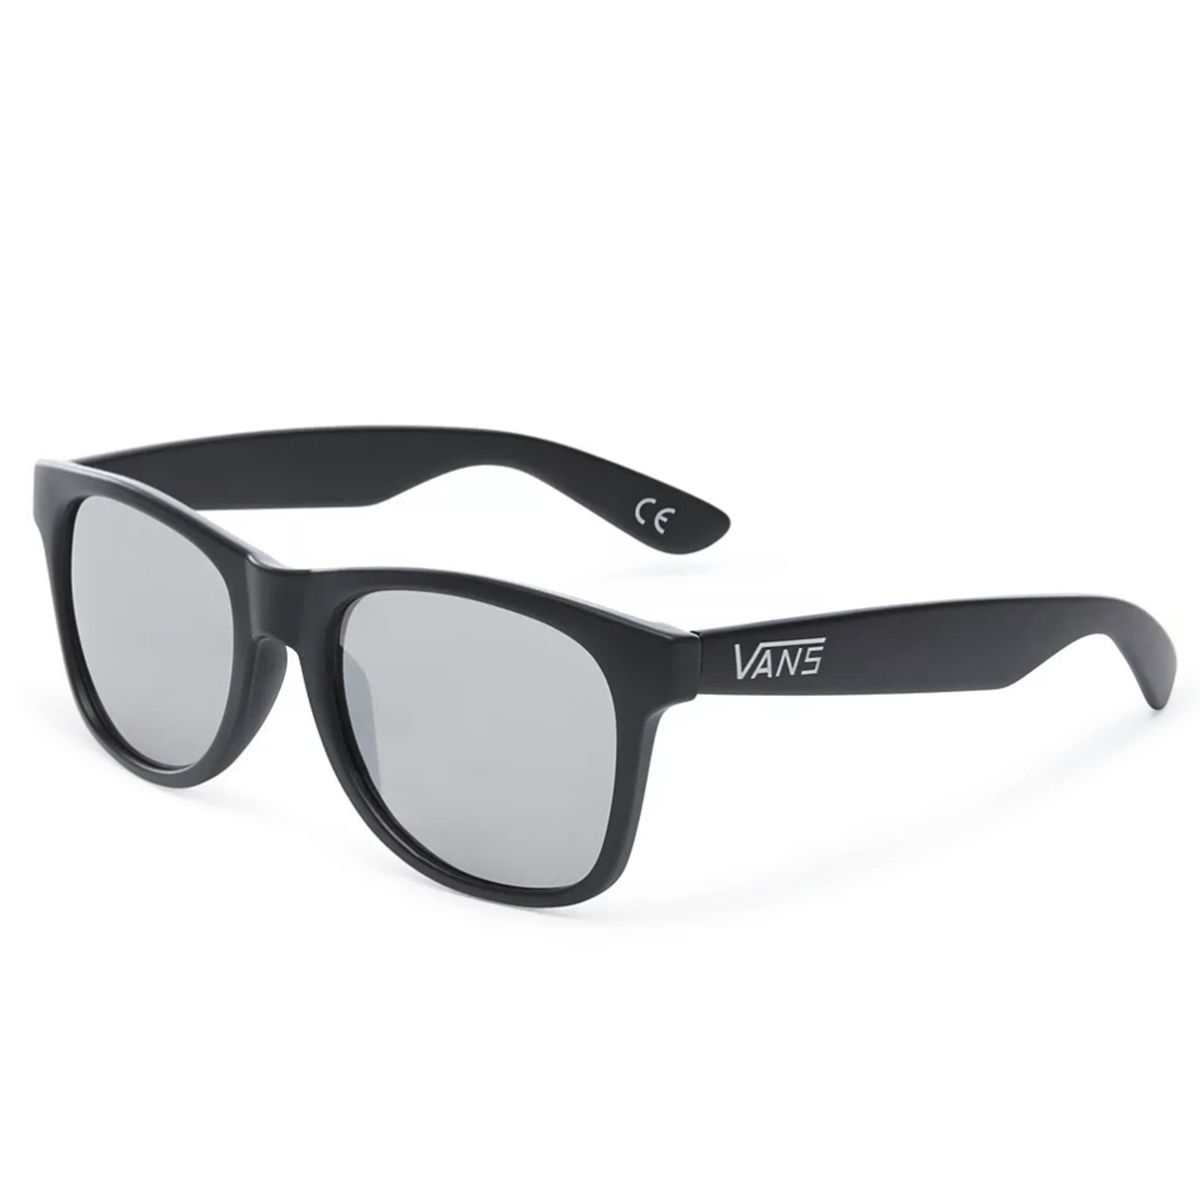 VANS Sunglasses Spicoli 4 Shades Matte Black / Silver Mirror